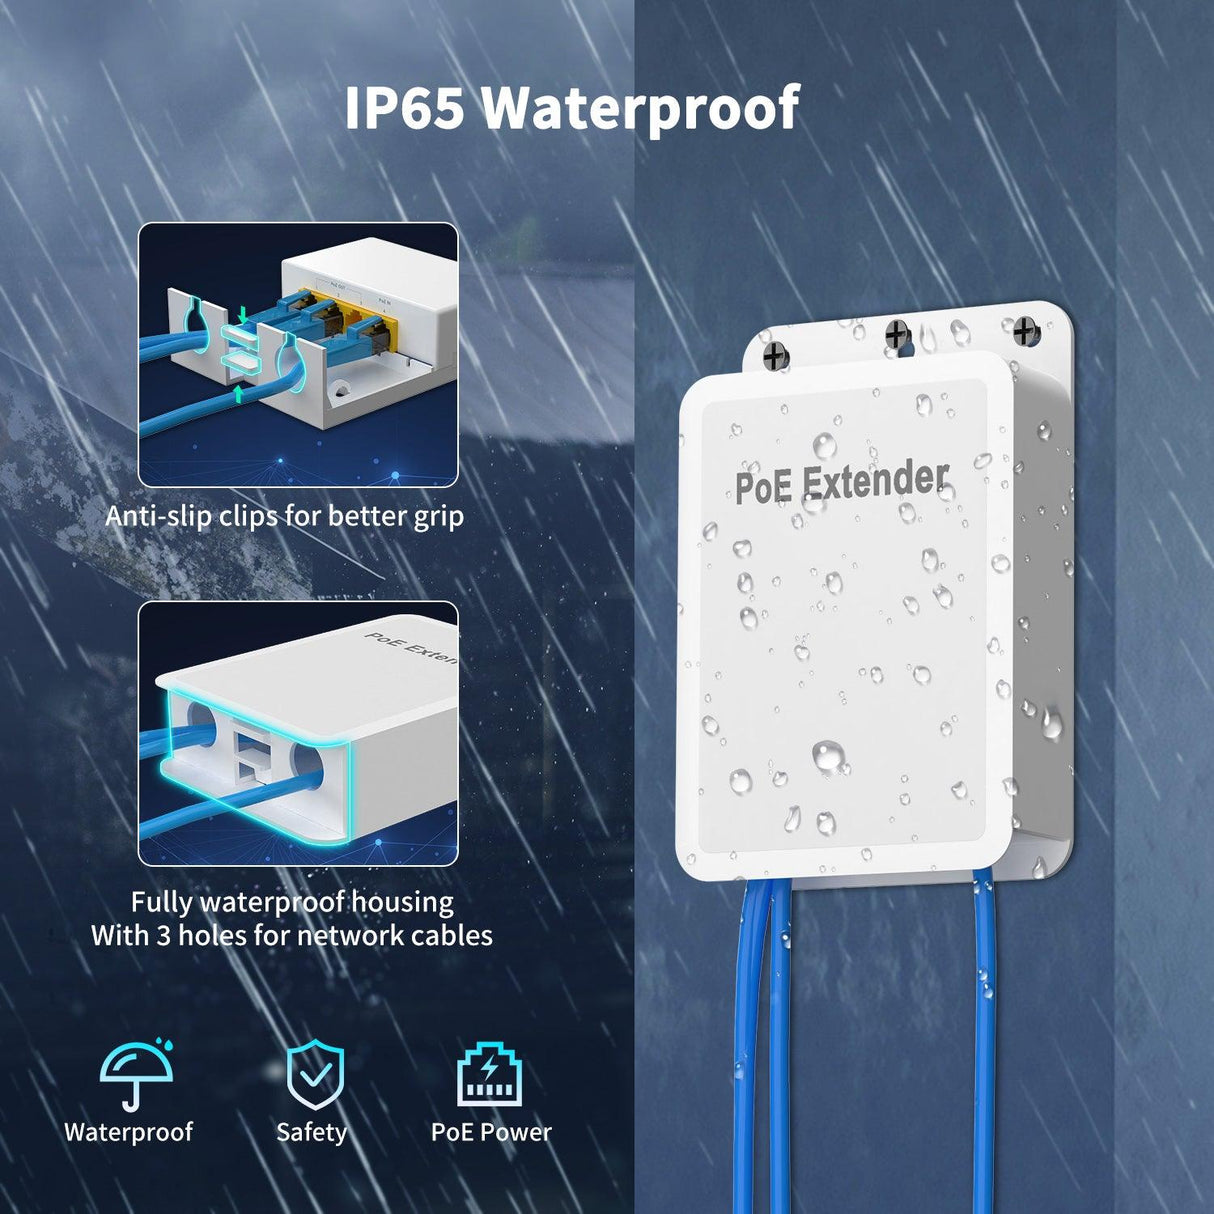 Outdoor Gigabit PoE Extender 1 in 3 Out, NICGIGA 4 Port PoE Repeater Waterproof, Vlan, Extend 100 Meters(328 ft), IEEE 802.3af/at Power Over Ethernet PoE Splitter. - NICGIGA